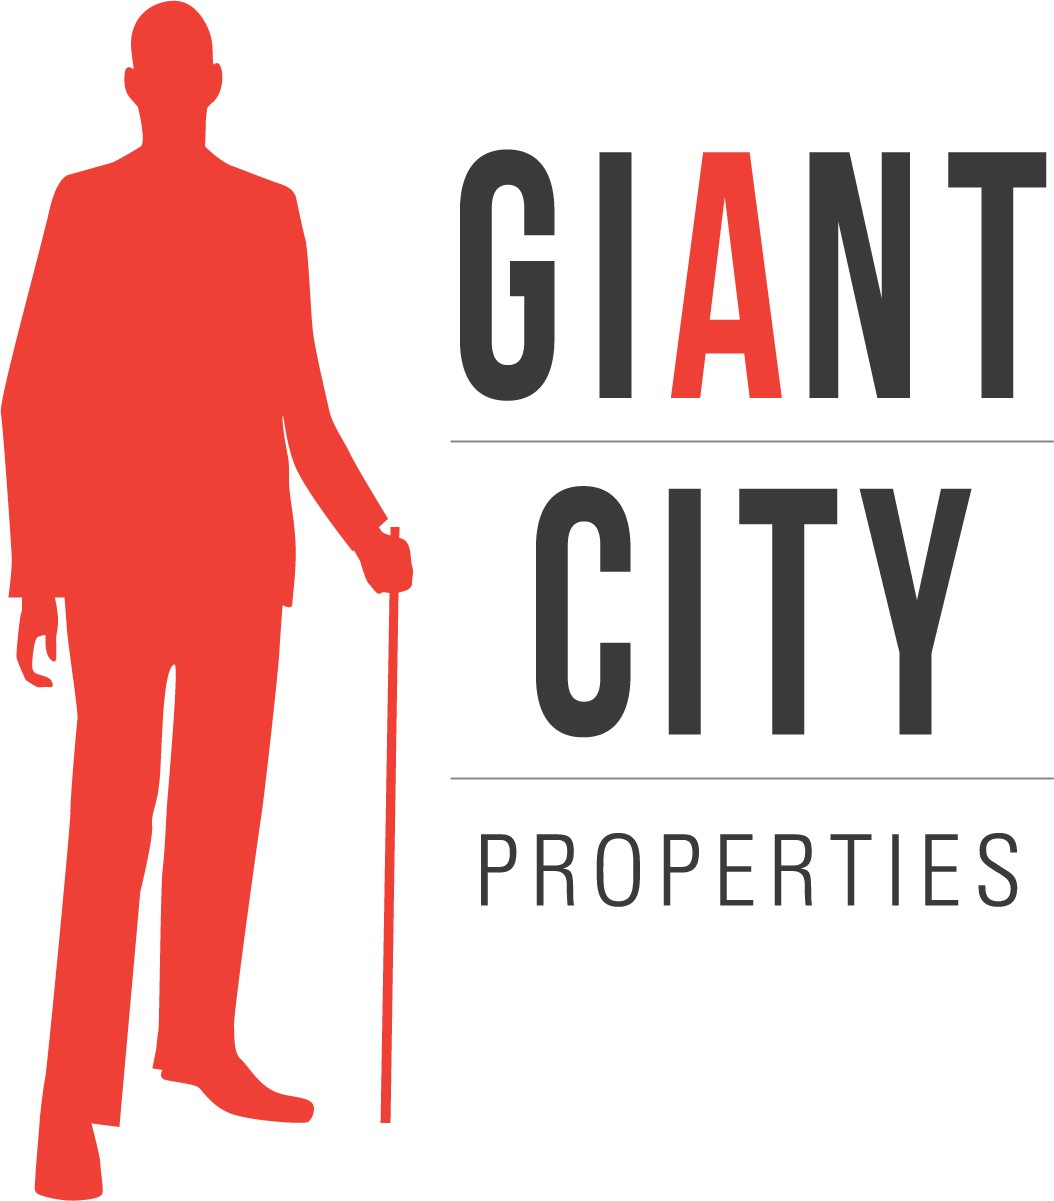 Big city properties logo